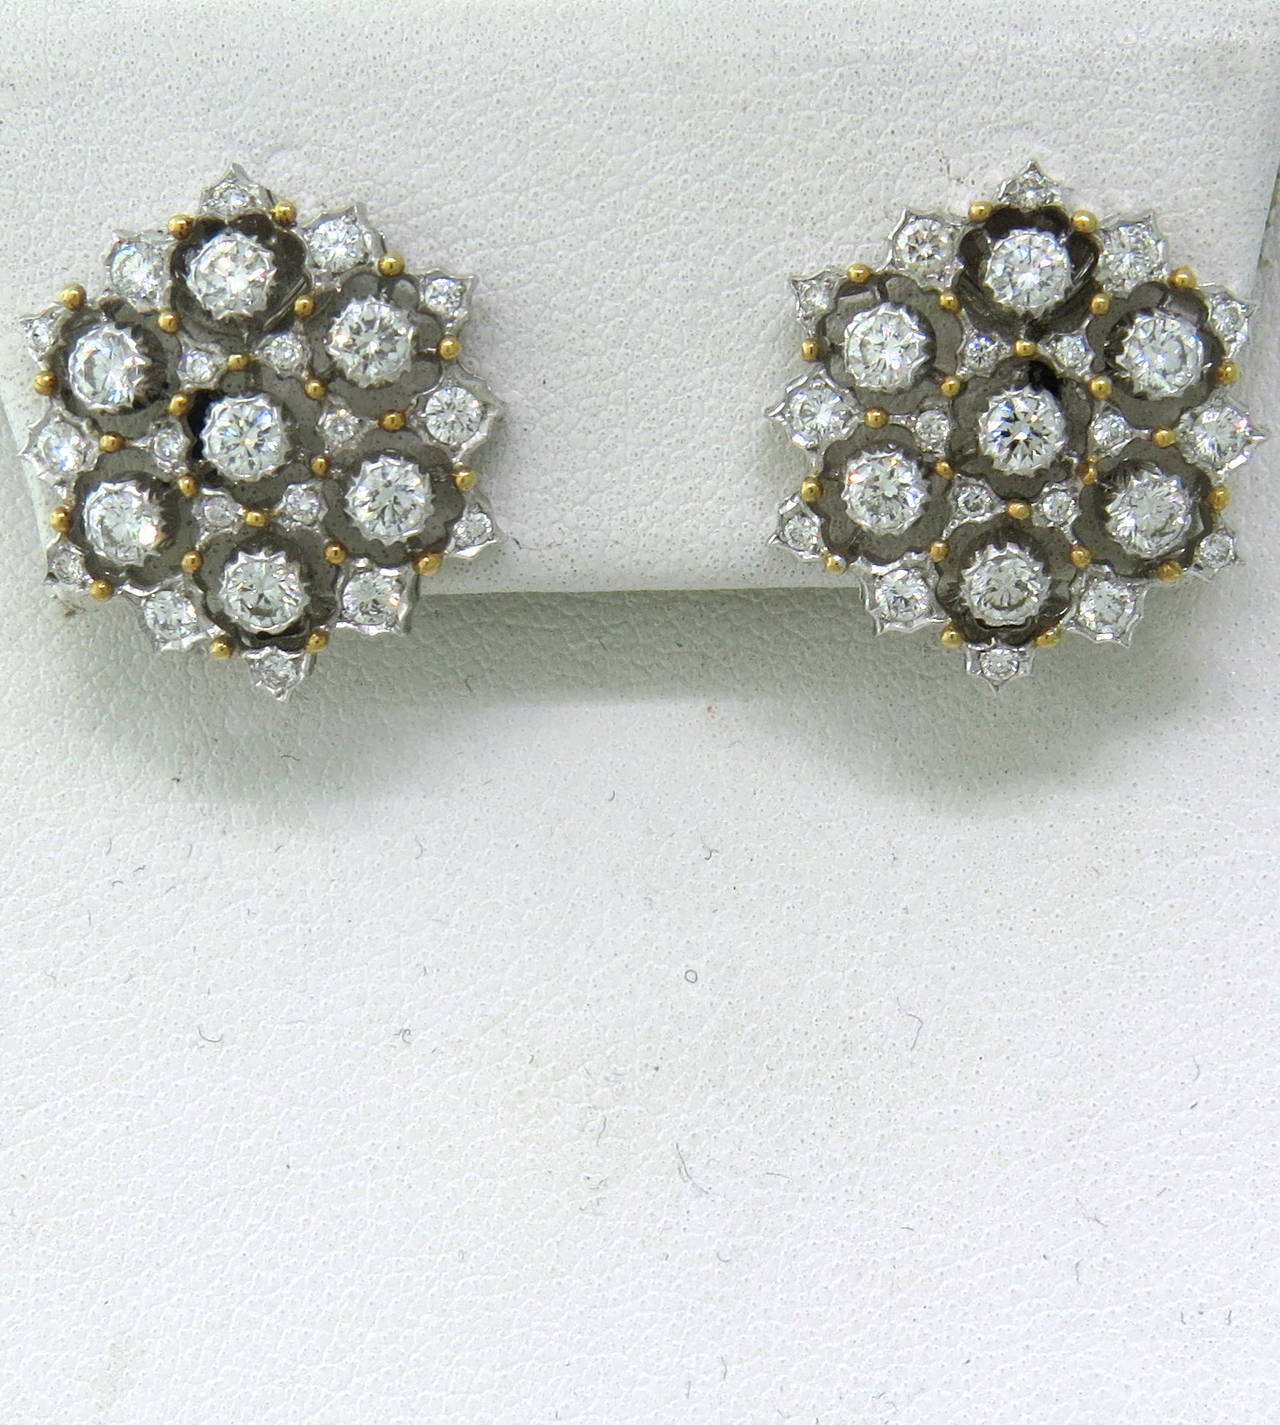 Buccellati 18k gold earrings with approx. 1.80-1.90ctw  diamonds, measuring 21mm in diameter. Come in Buccellati box, weight - 8.9 gr